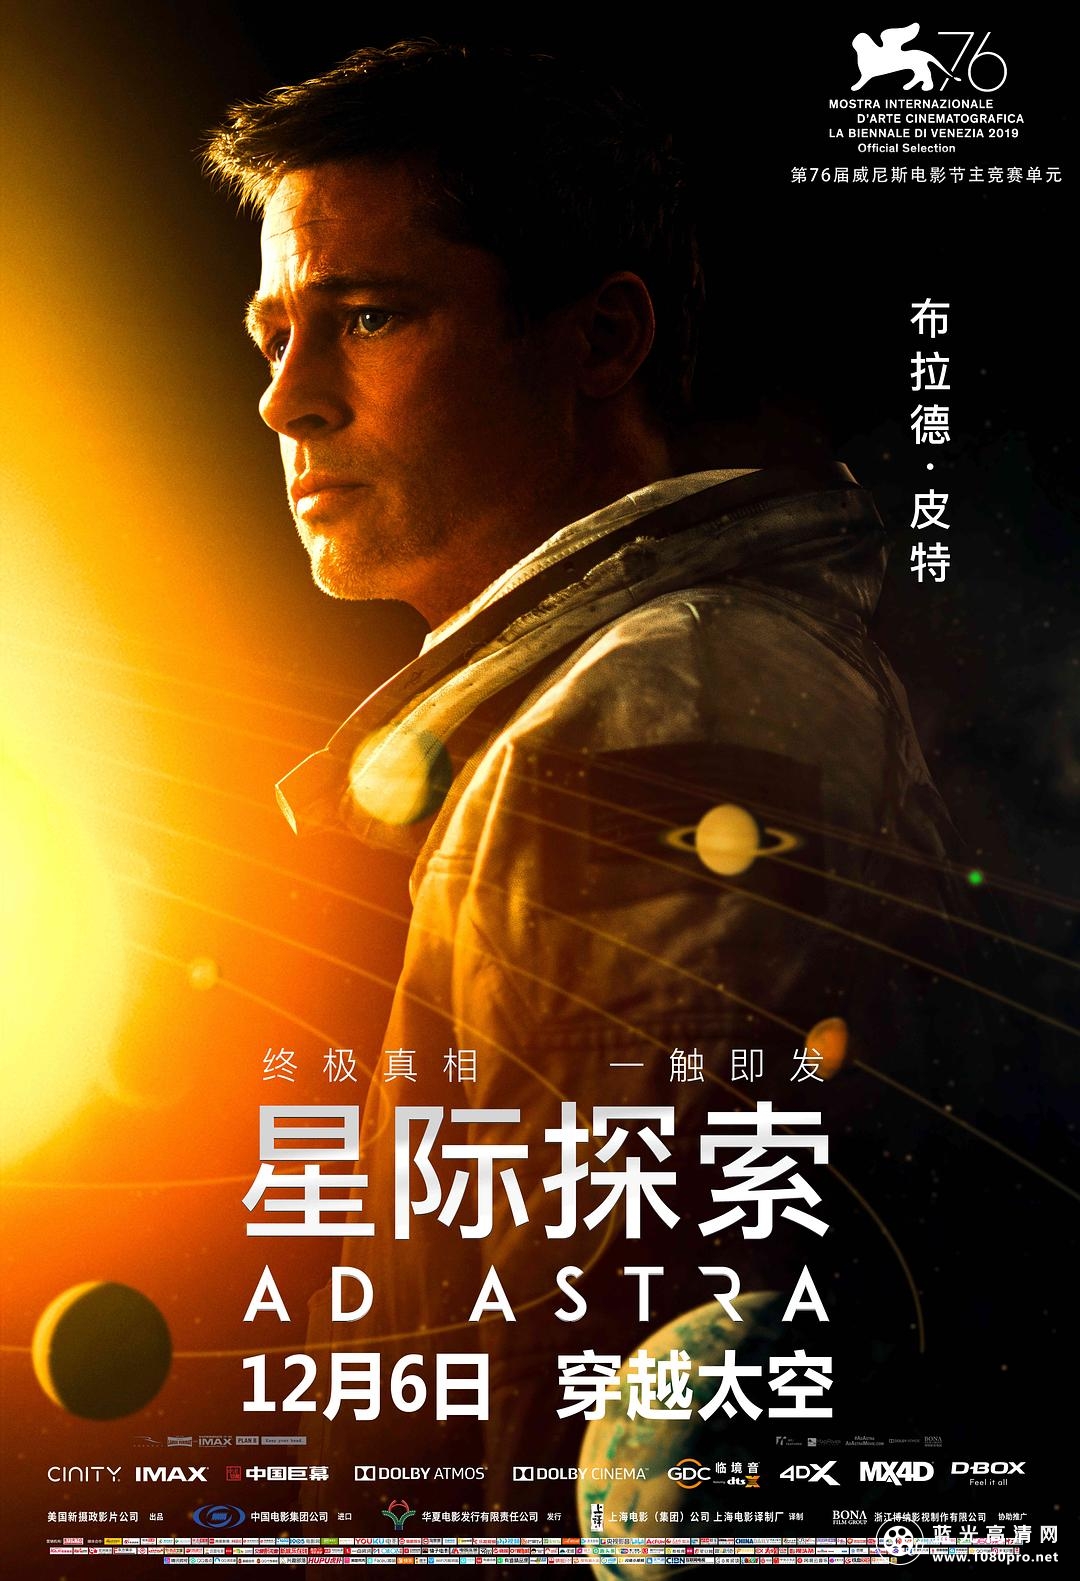 星际探索/星际任务 Ad.Astra.2019.720p.BluRay.x264-AAA 5.45GB